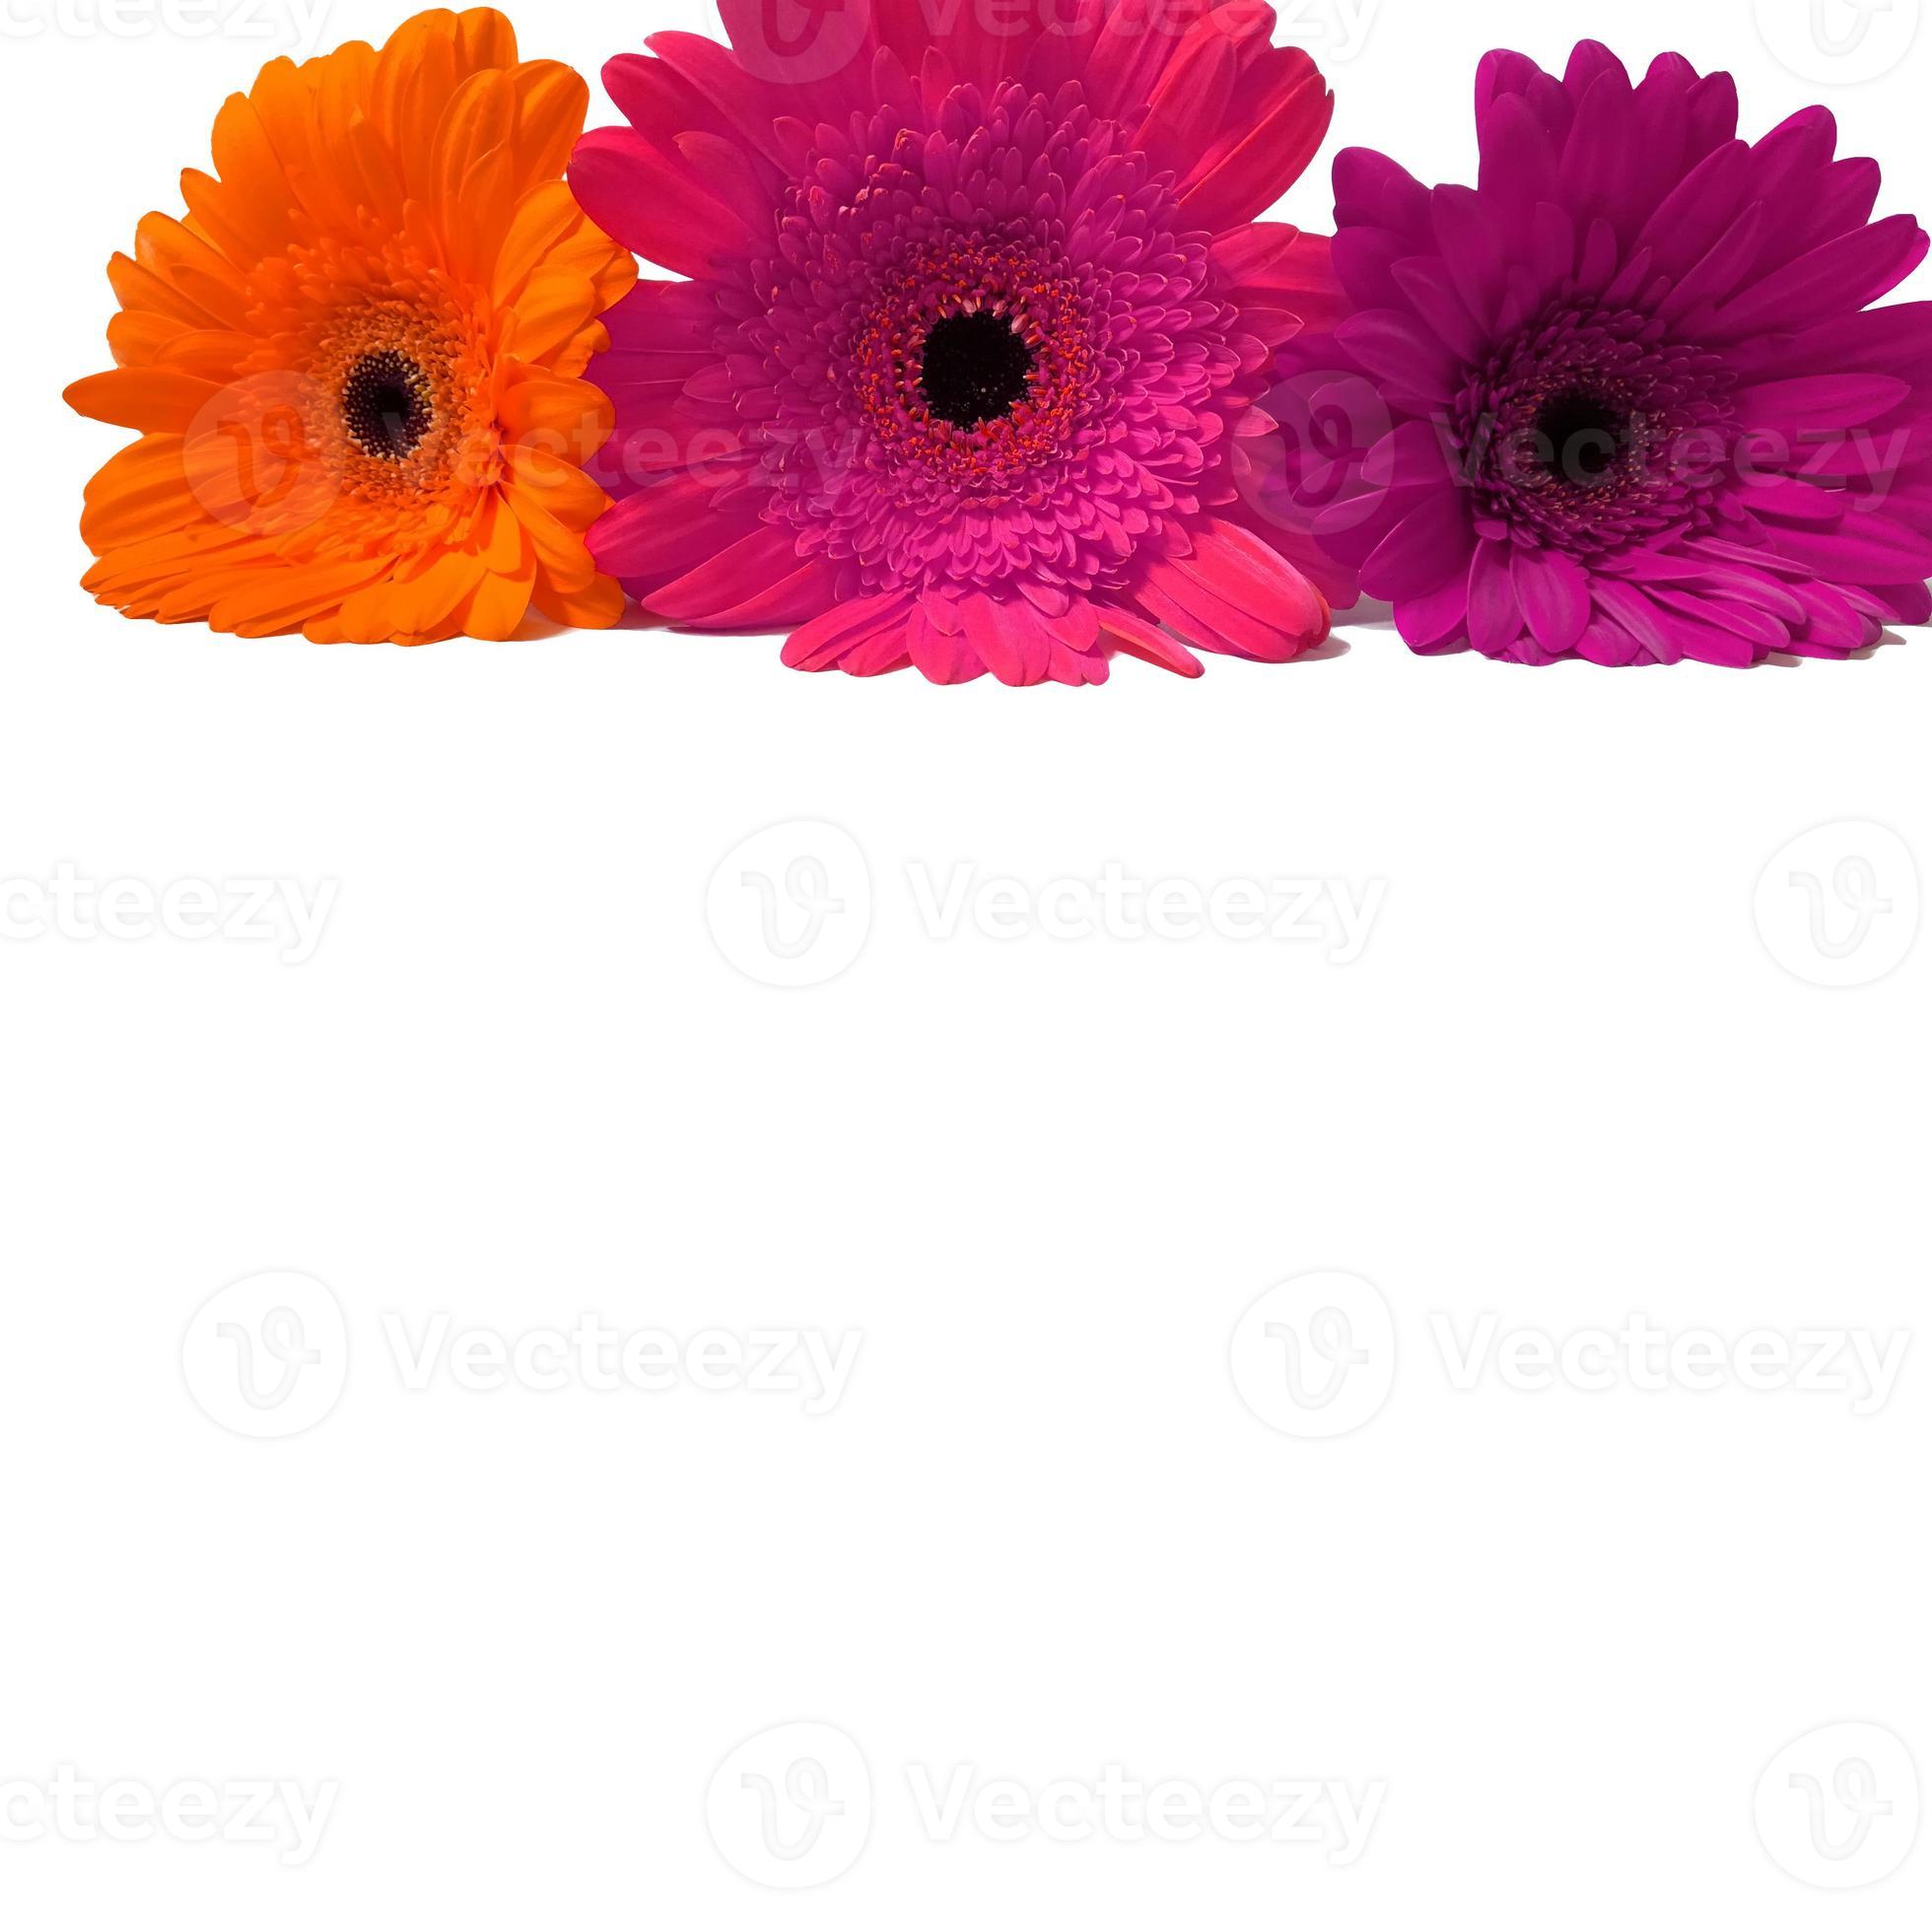 gerbera naranja, rosa, flores moradas aisladas en un fondo blanco. 5964573  Foto de stock en Vecteezy